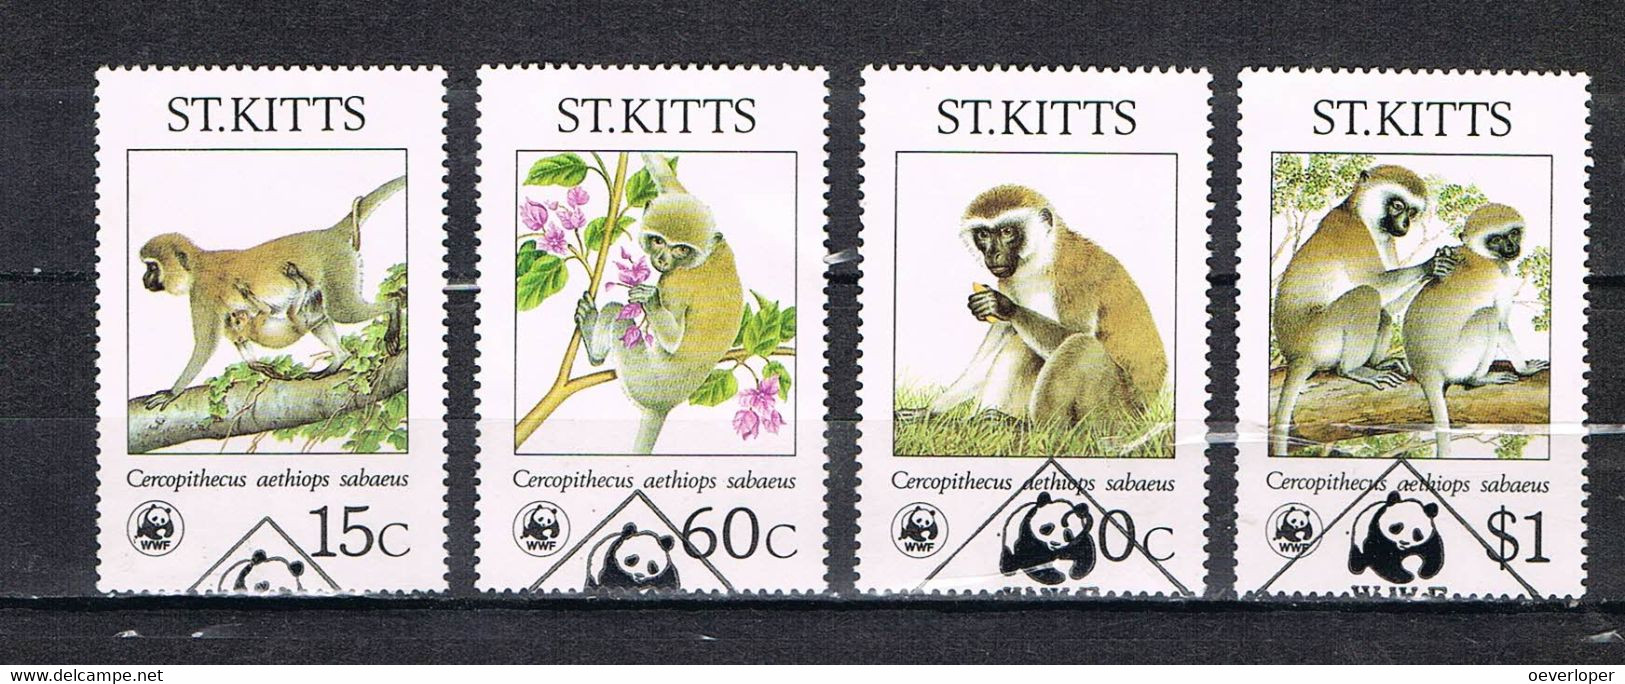 St Kitts 1986 Monkeys WWF Used - Used Stamps